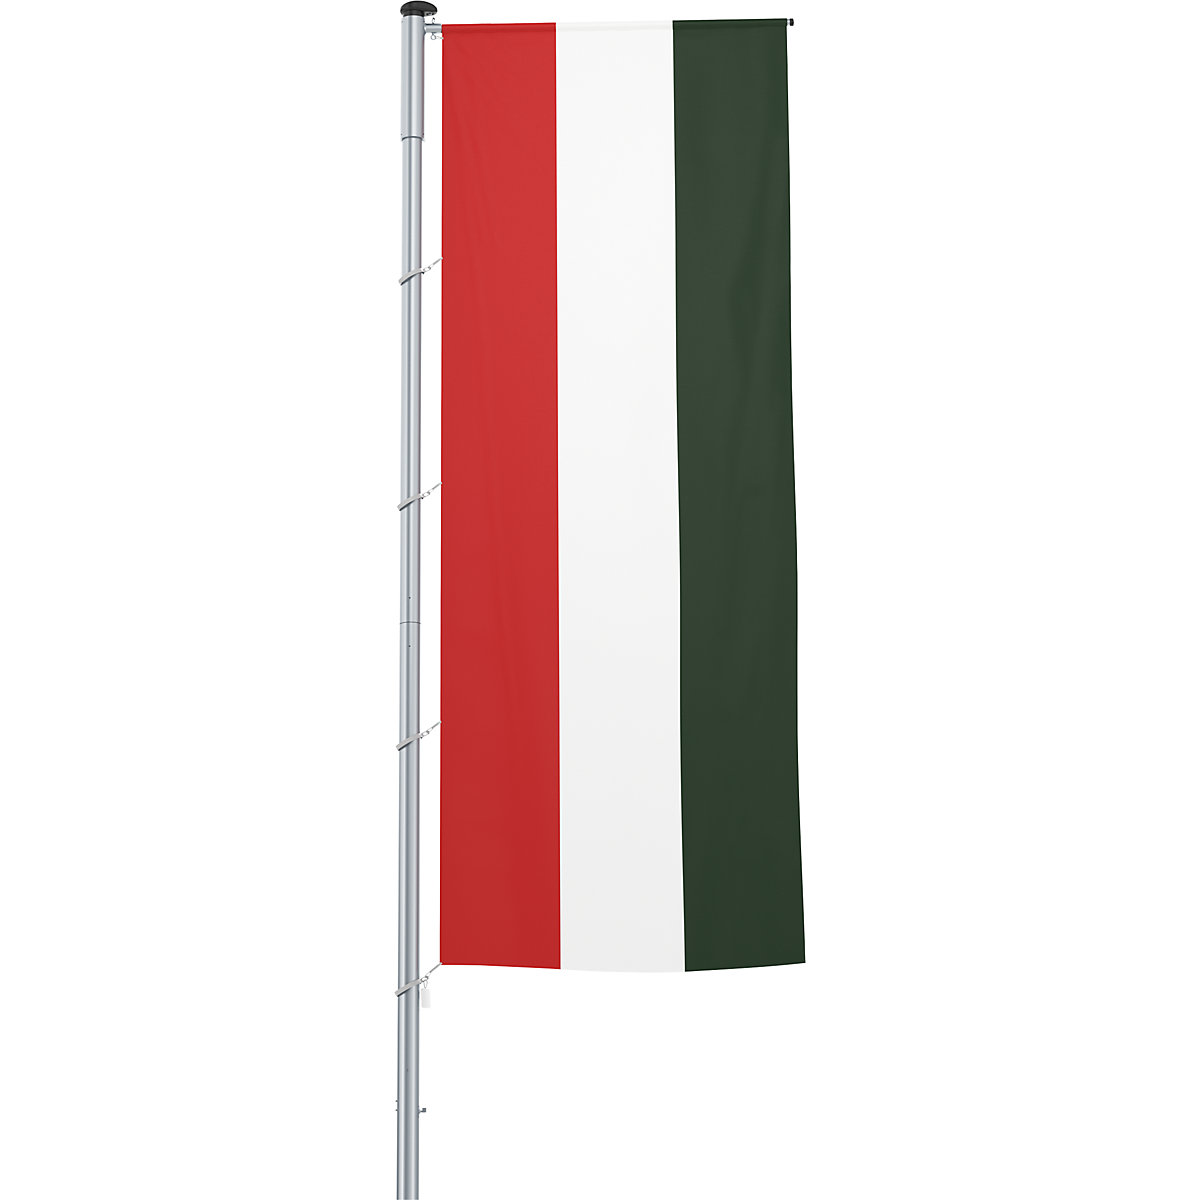 Steag pentru braț/drapel național – Mannus, format 1,2 x 3 m, Ungaria-25